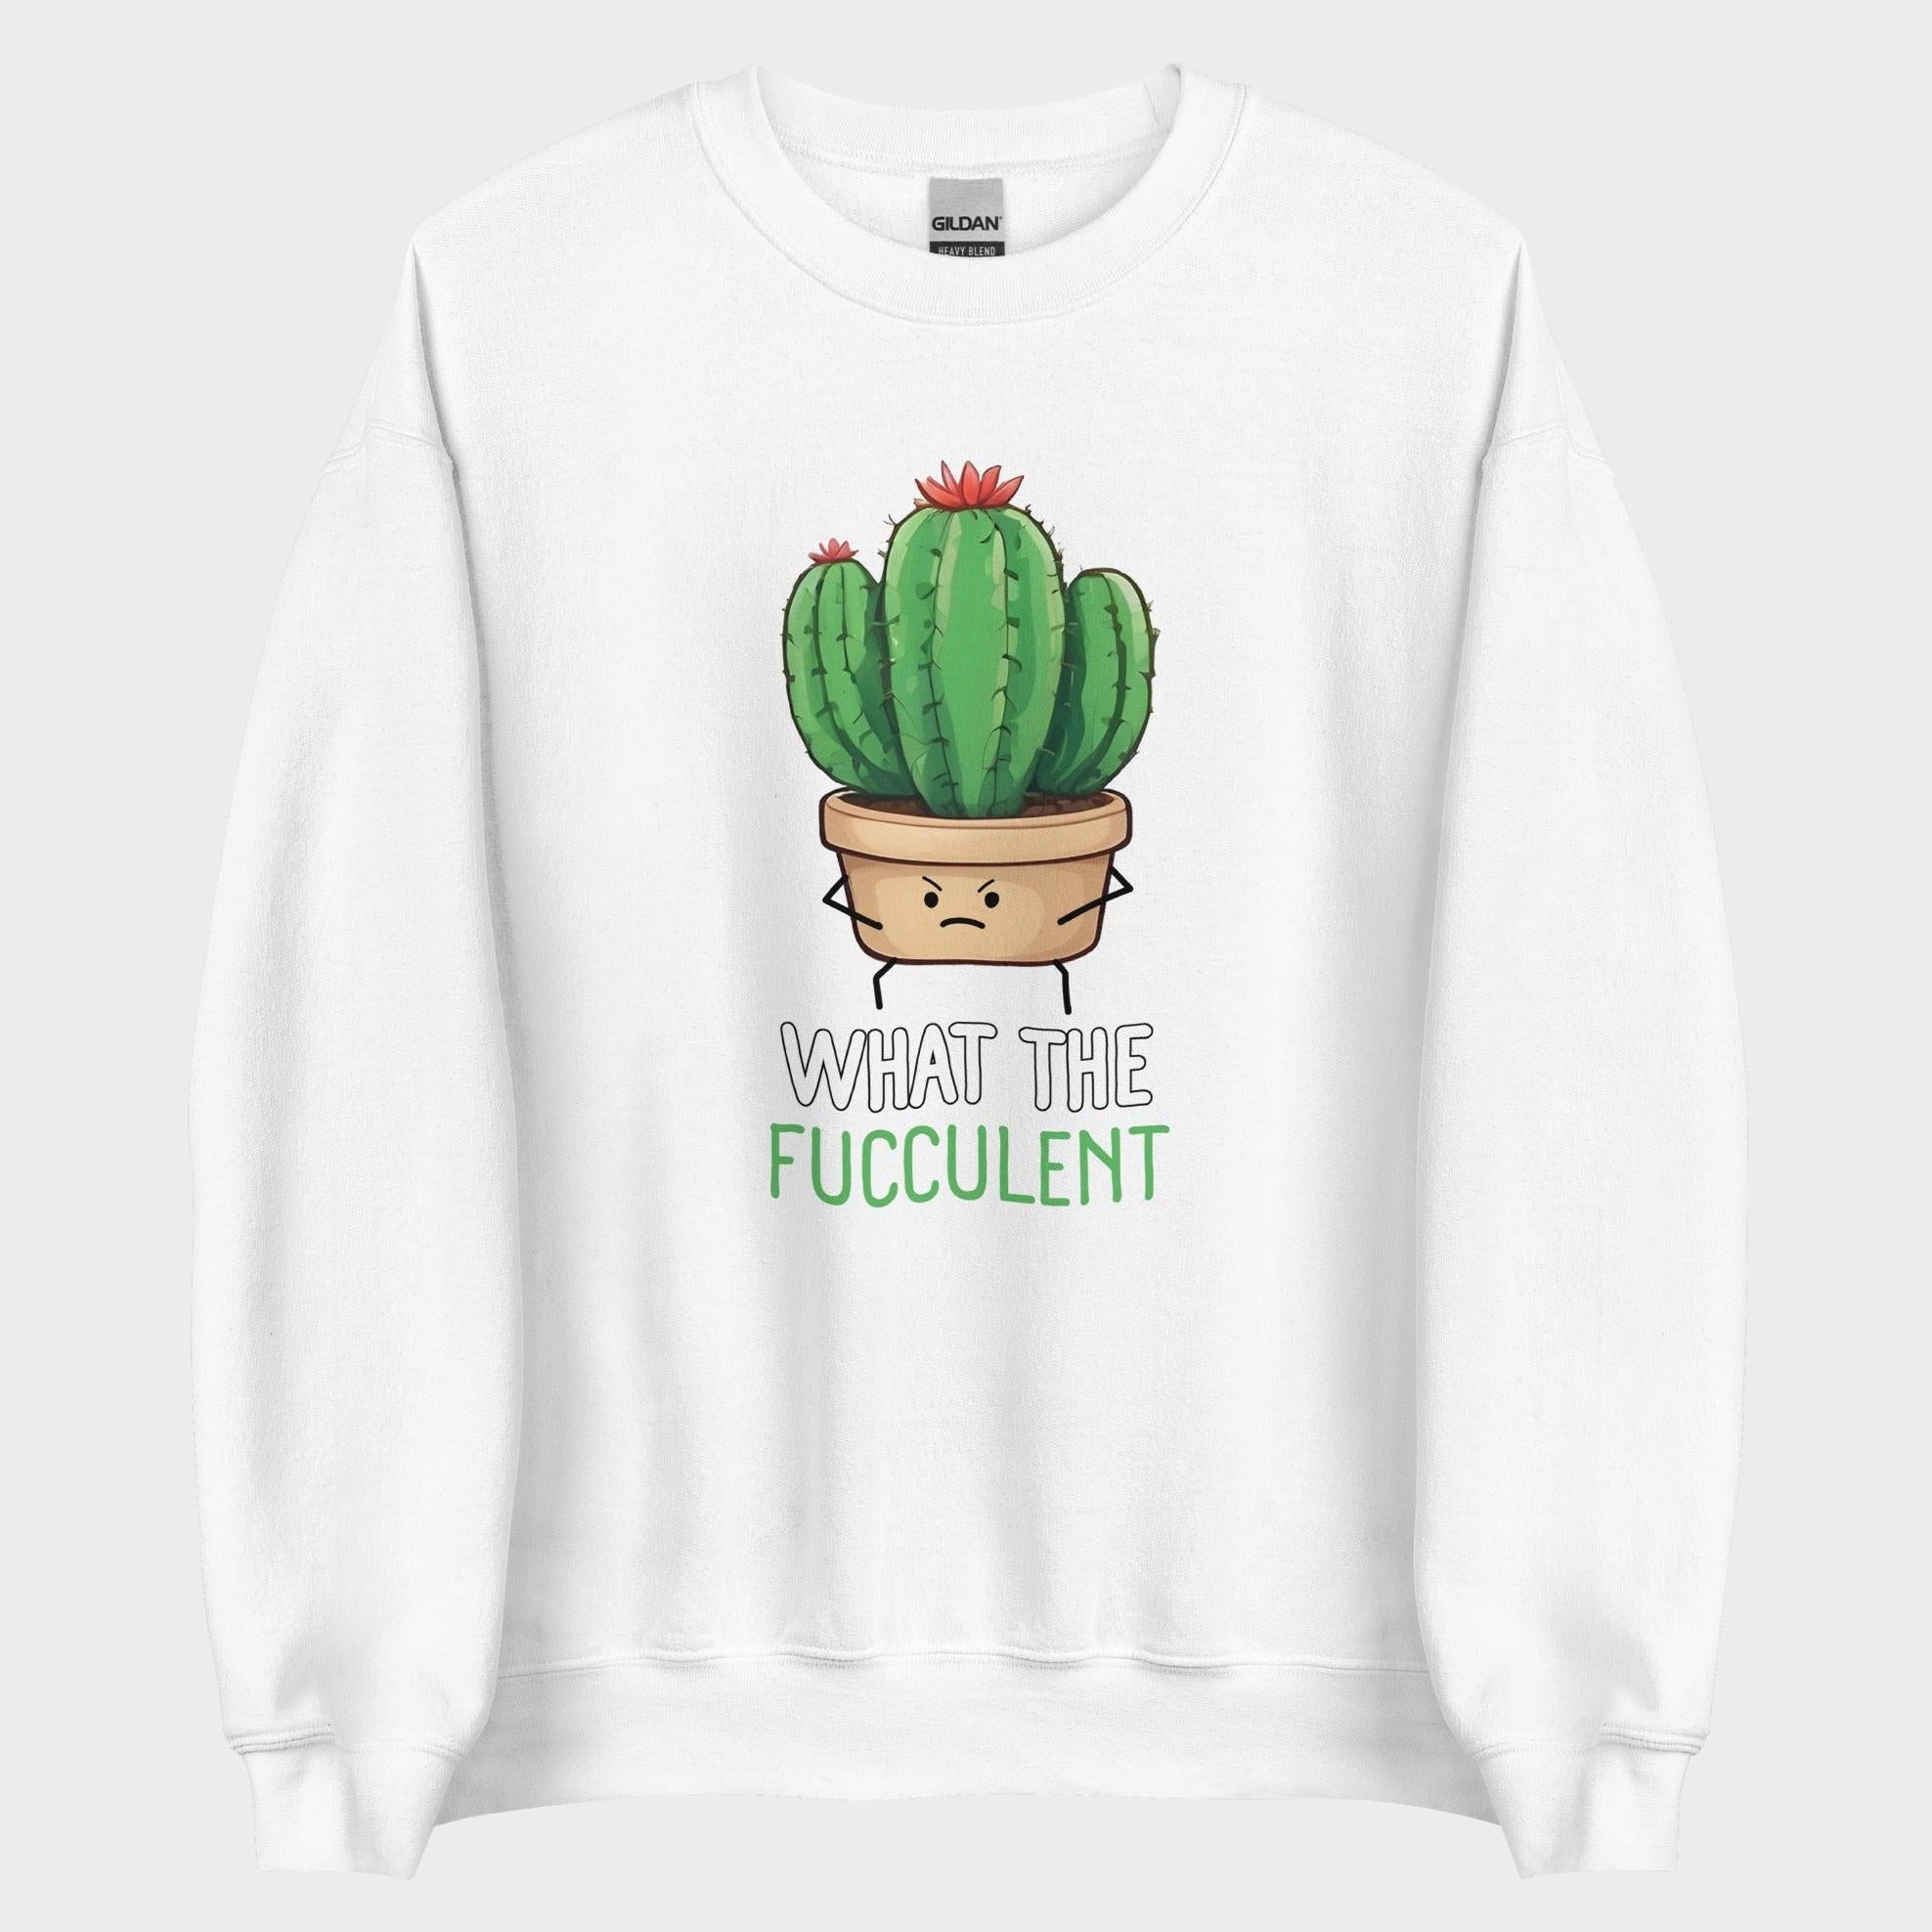 What The Fucculent - Sweatshirt